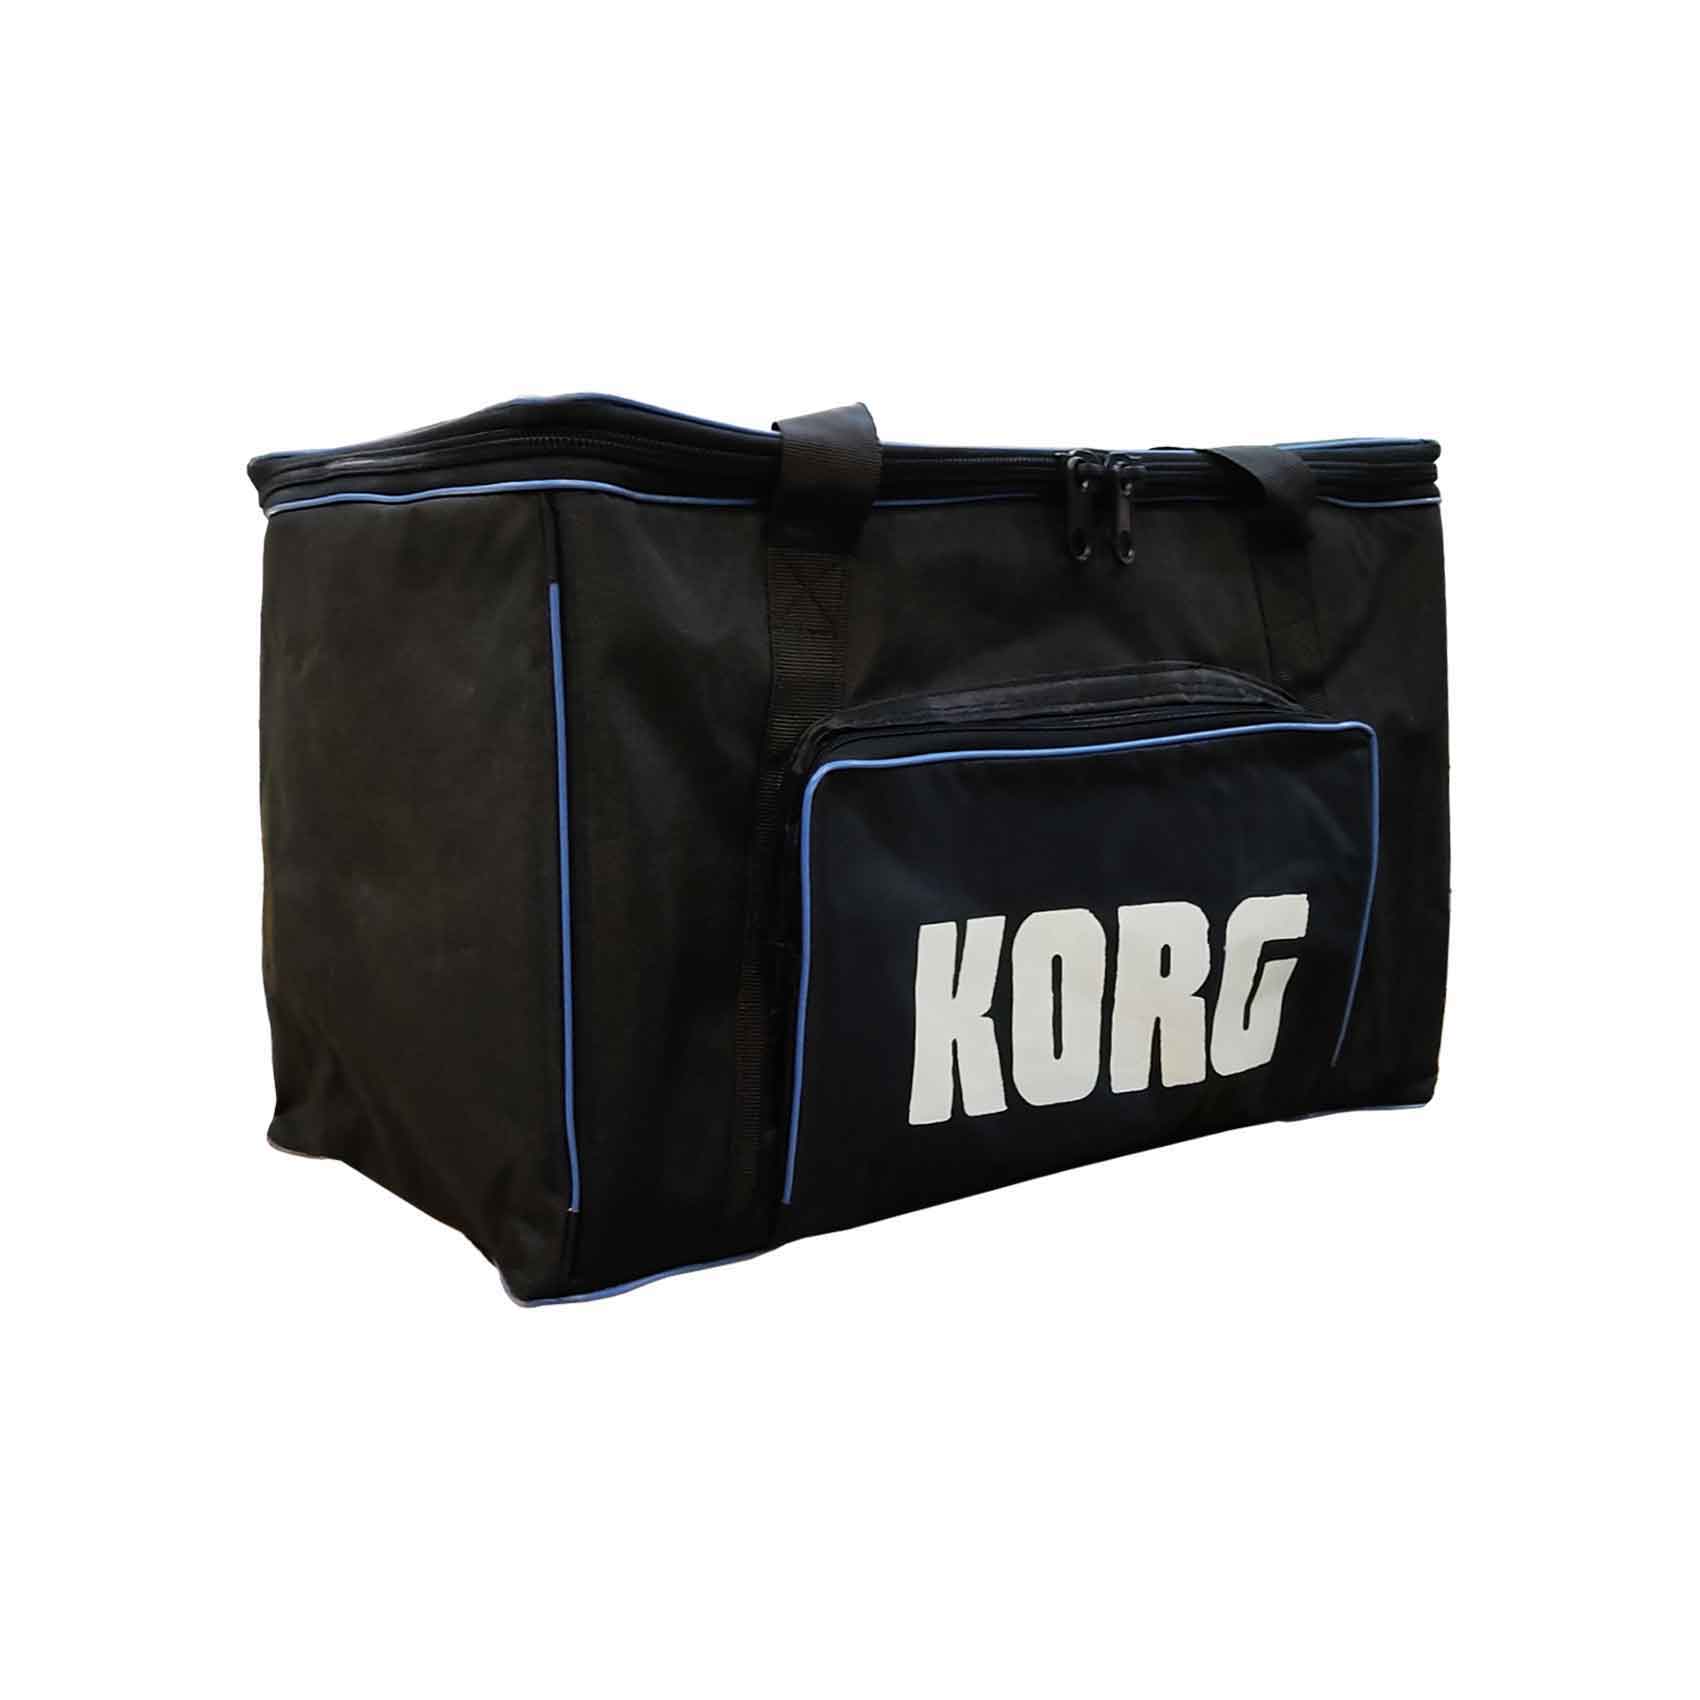 کیف لوازم صوتی KORG مدل K1